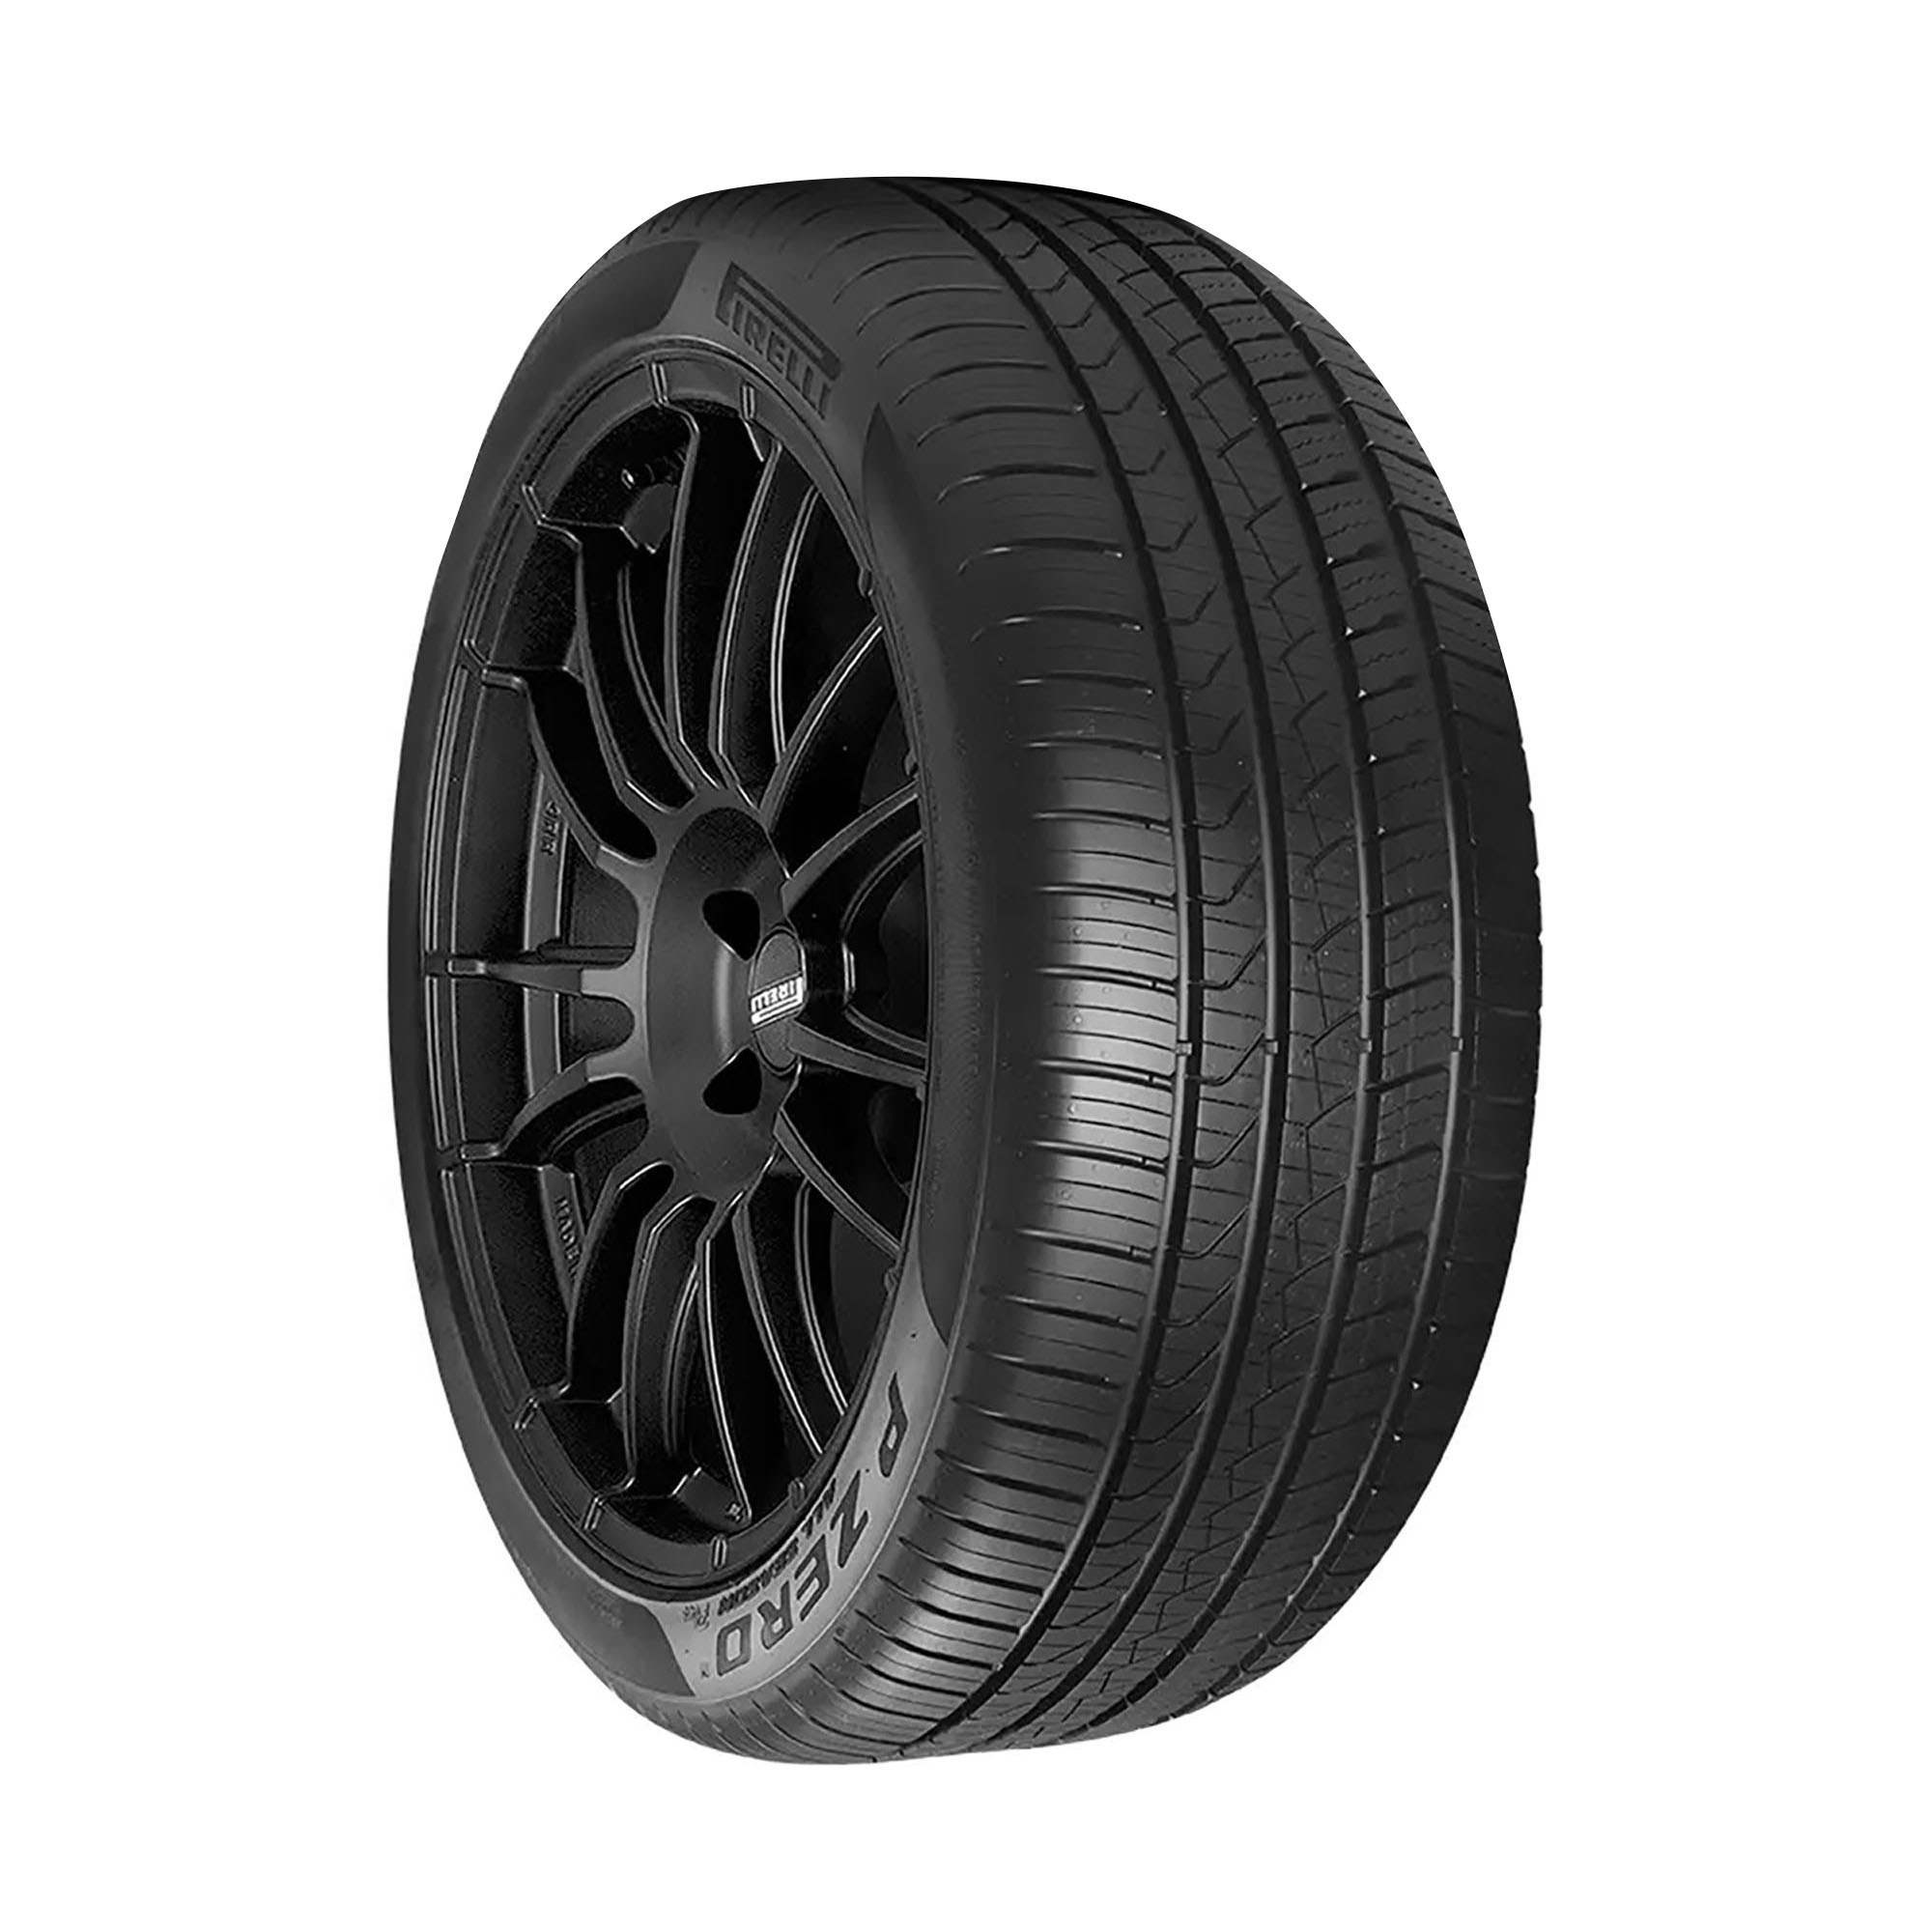 Pirelli P Zero All Season Plus UHP All Season 245/45R18 100Y XL Passenger Tire - image 4 of 7